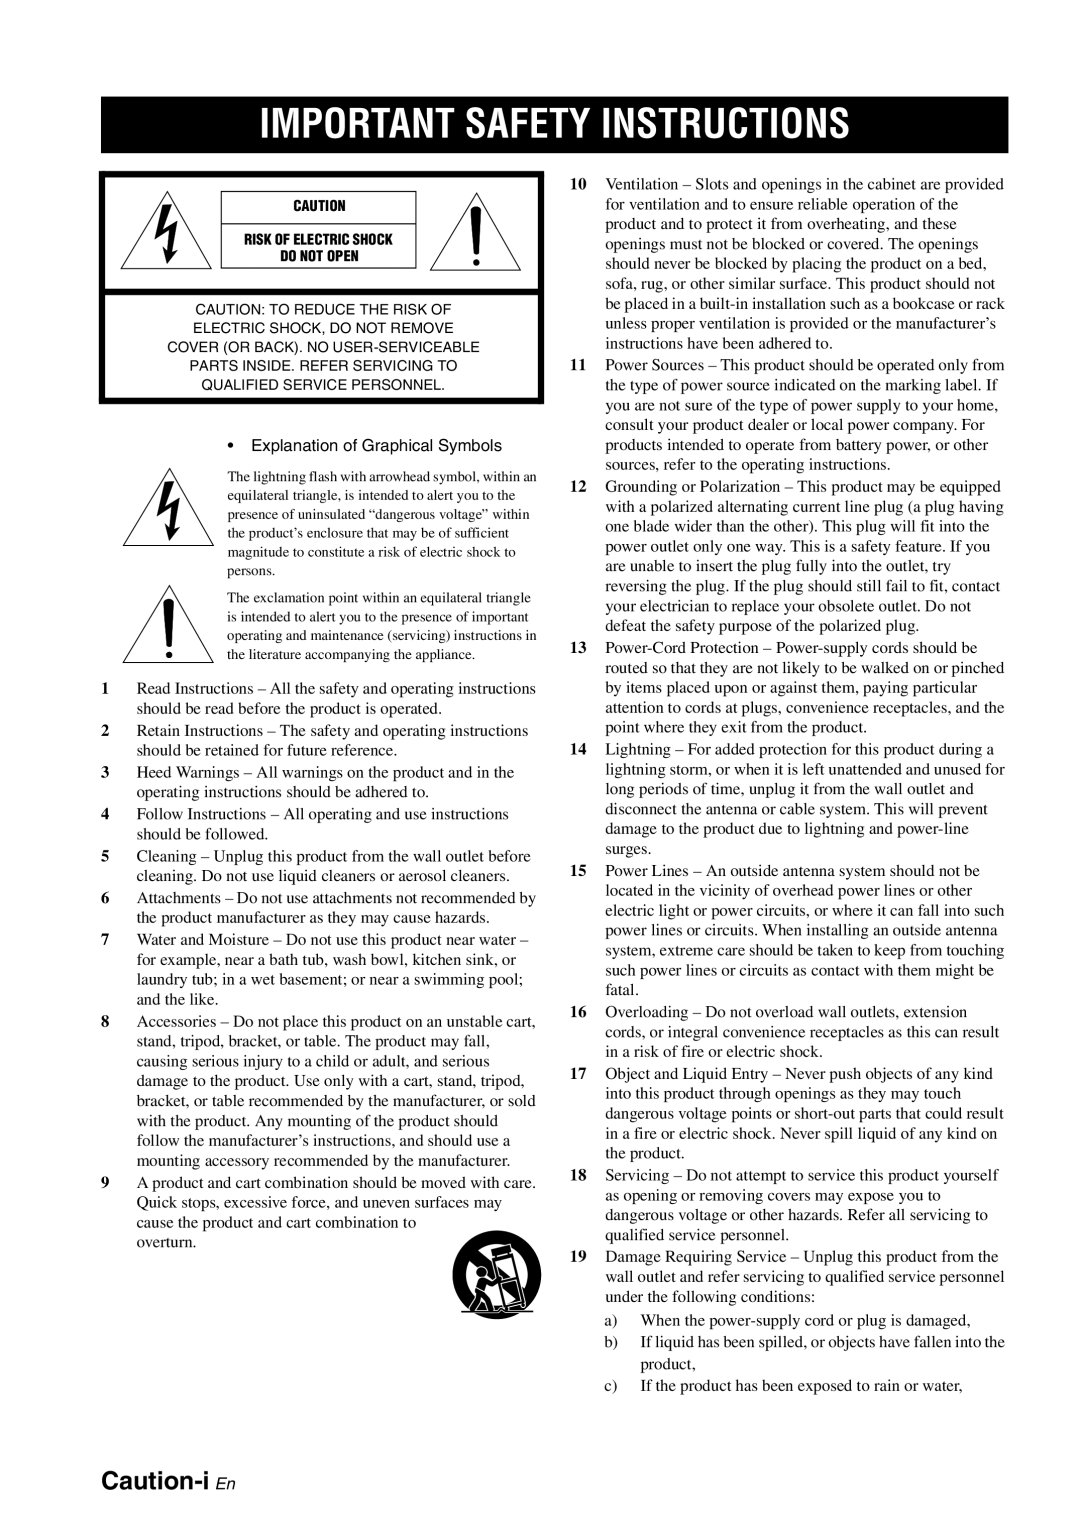 Yamaha HTR-6180 owner manual Caution-i En, Important Safety Instructions 